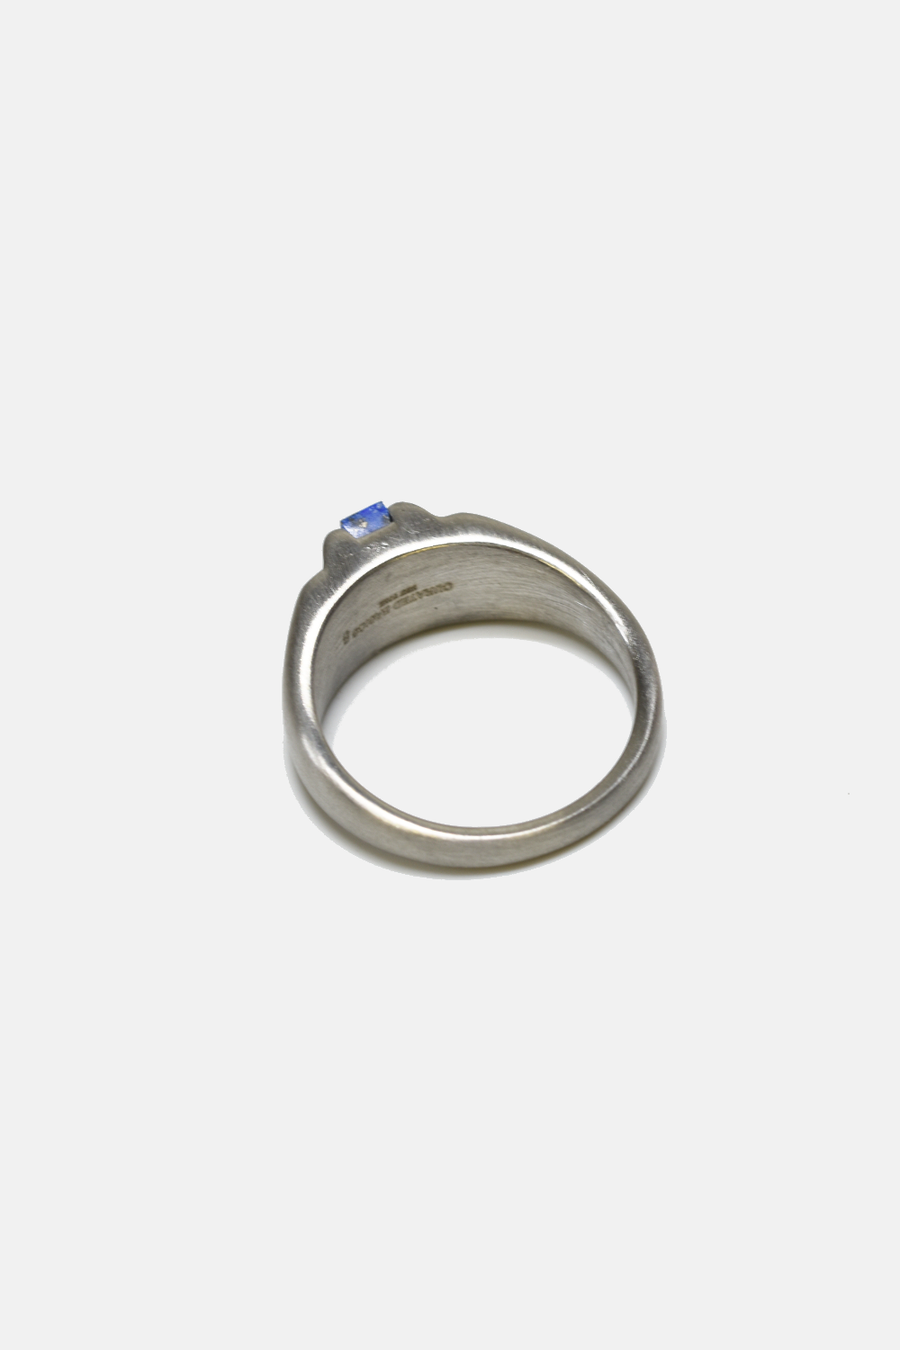 Lapis Lazuli Inlay Ring: 9